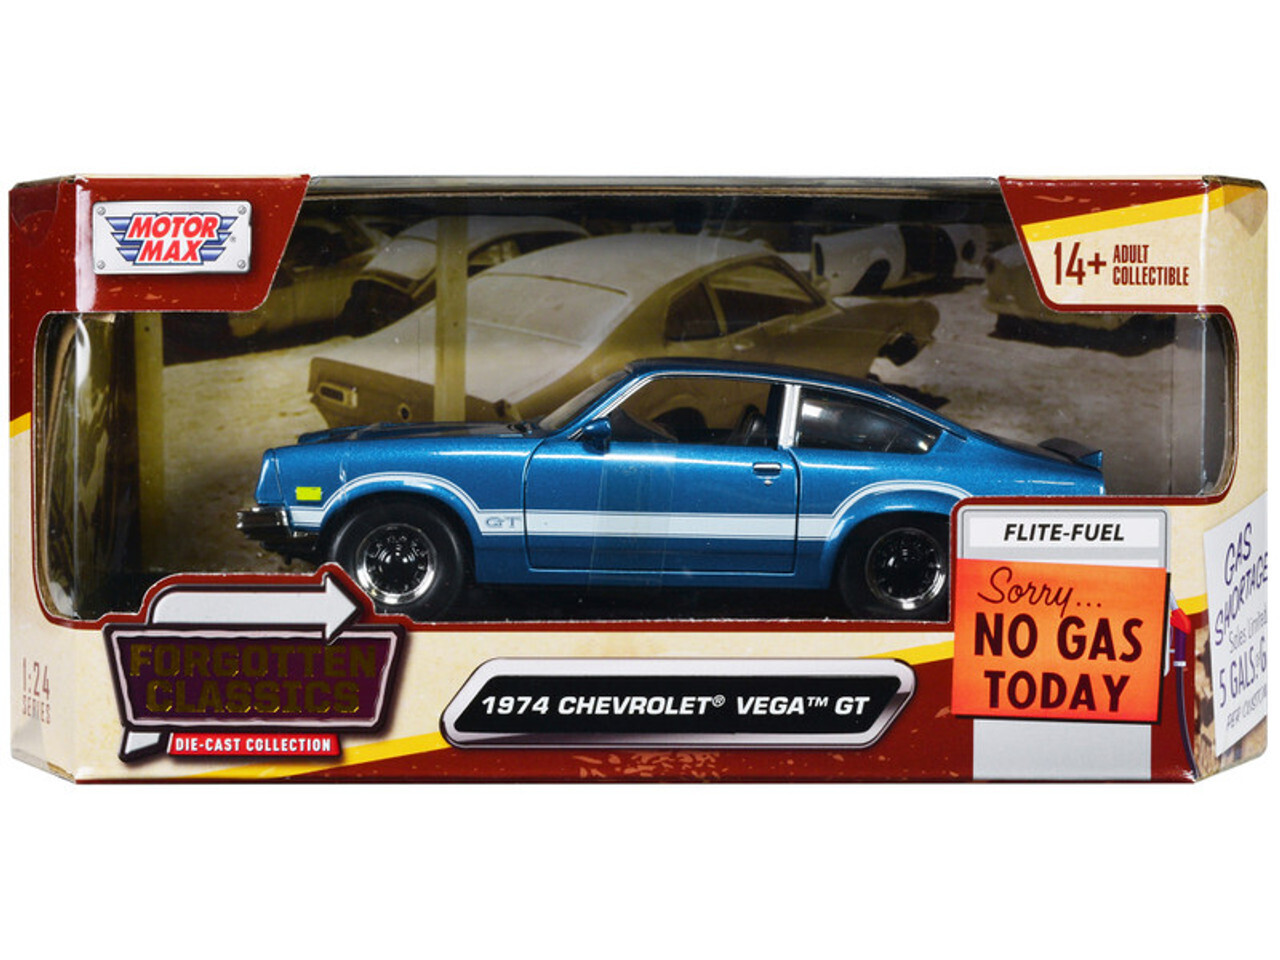 1974 Chevy vega Gt Azul